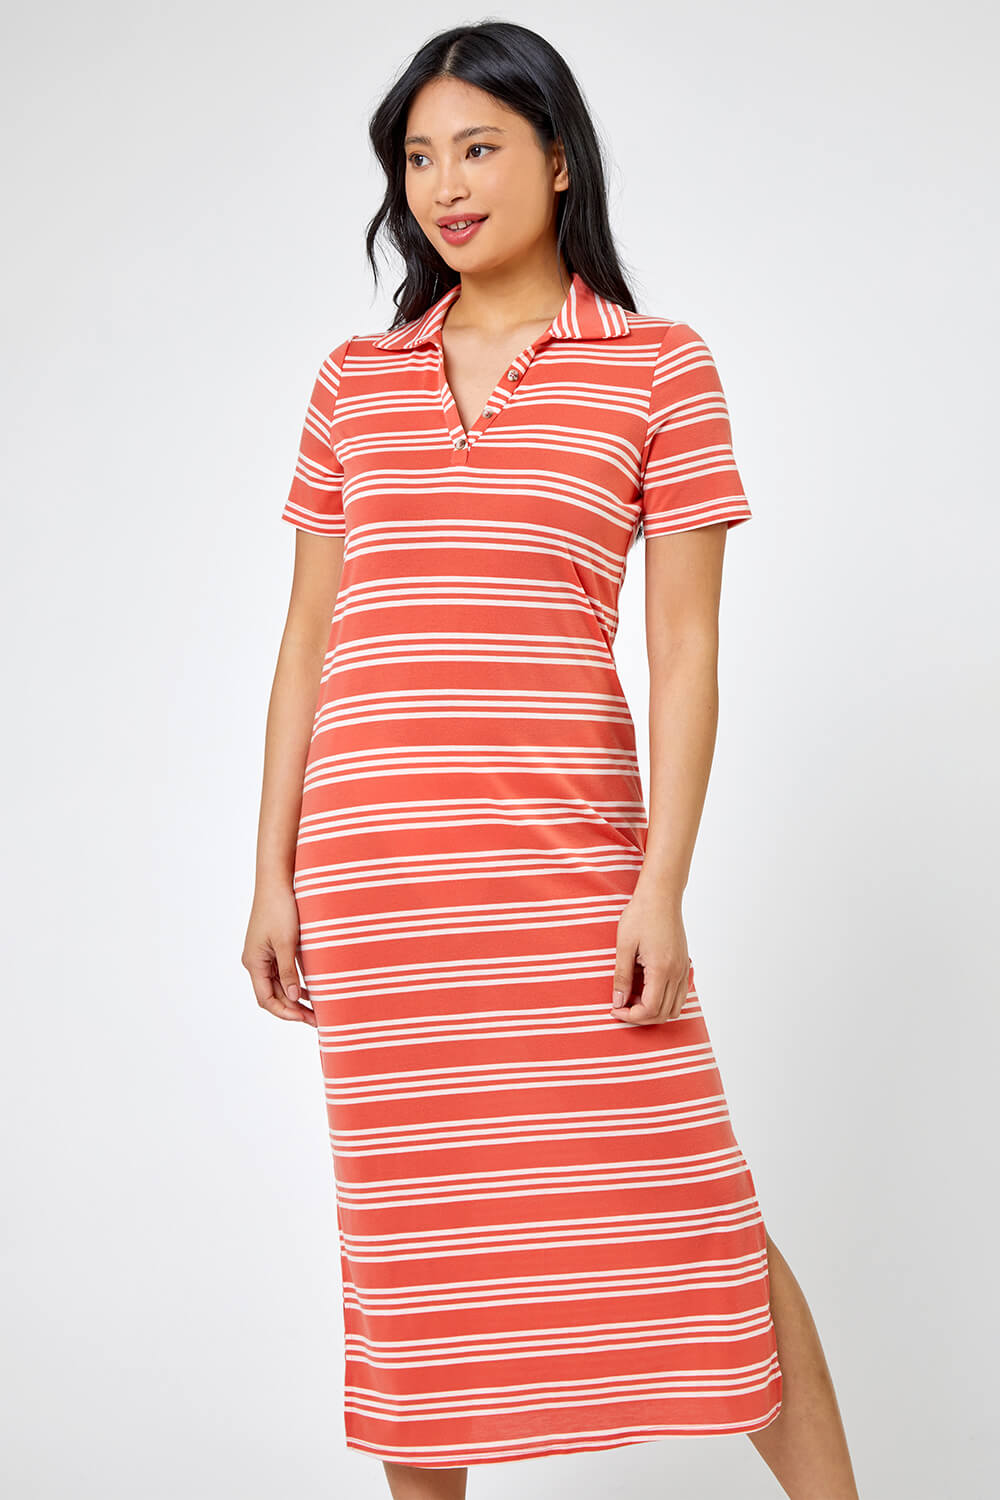 CORAL Petite Stripe Print Polo Shirt Dress, Image 3 of 5